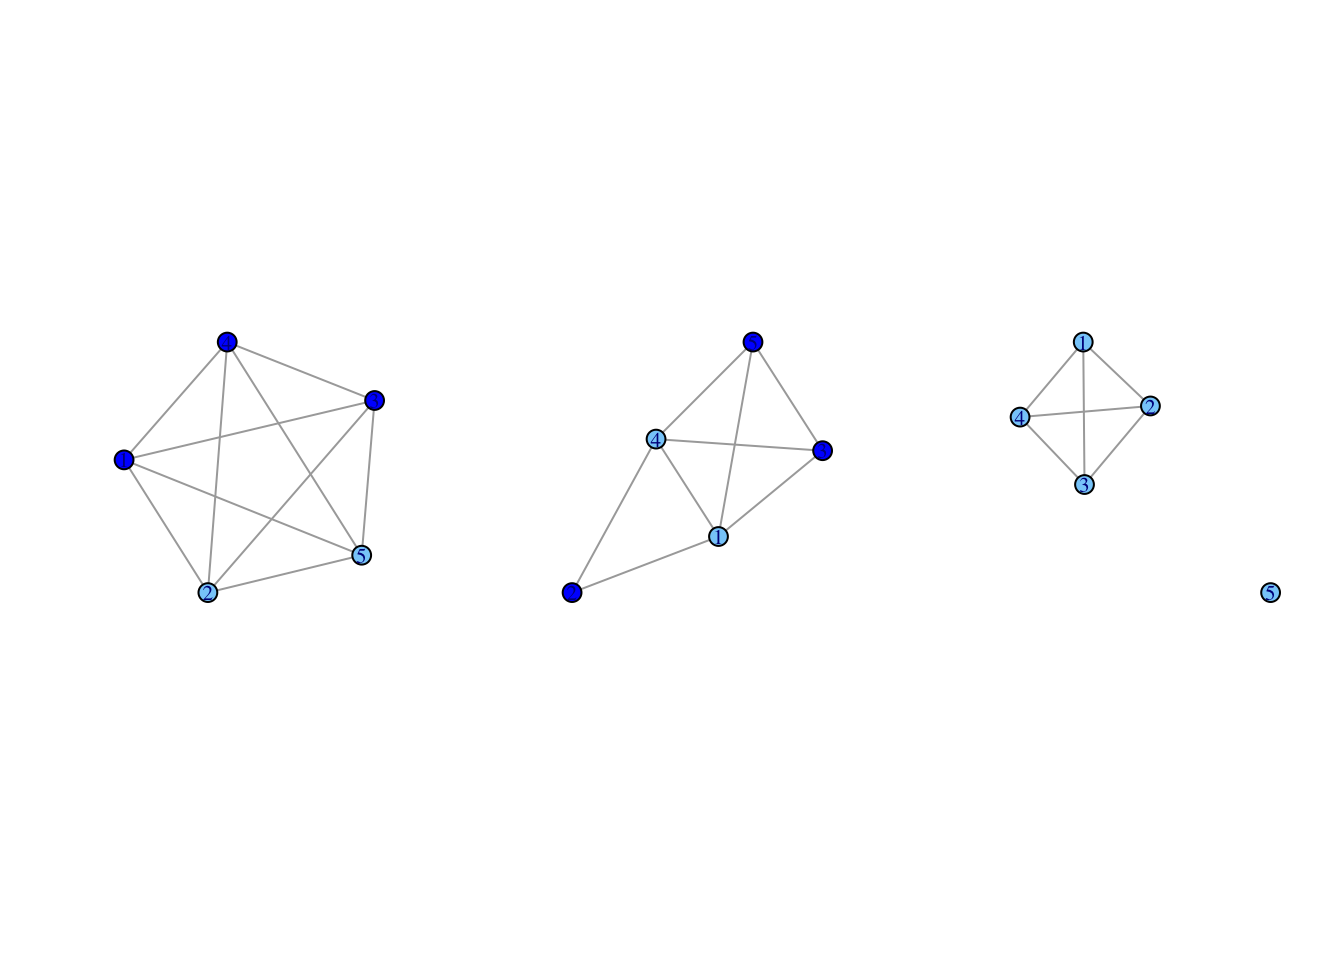 6 Ego Network Data  Network Analysis: Integrating Social Network